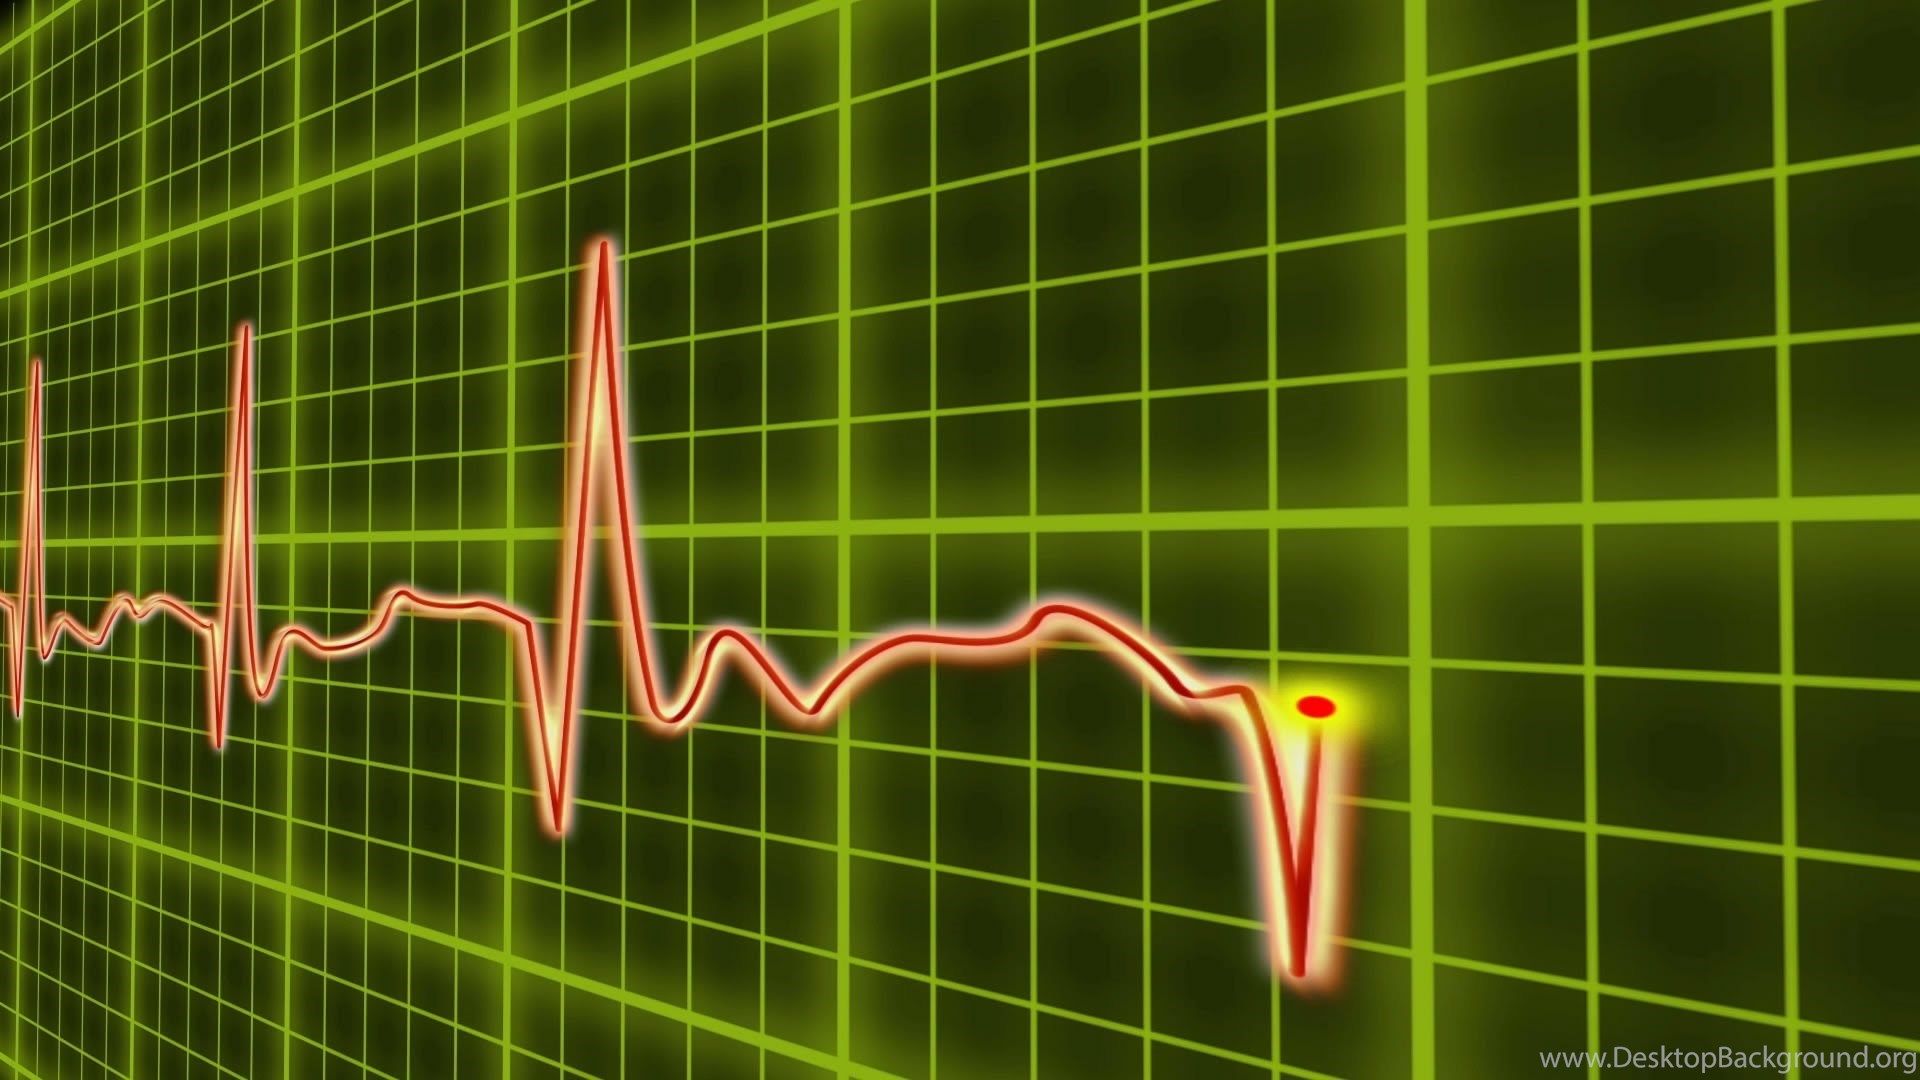 EKG Cardio Heart Beat, Normal And Zero Pulse With Audio. Stock. Desktop Background